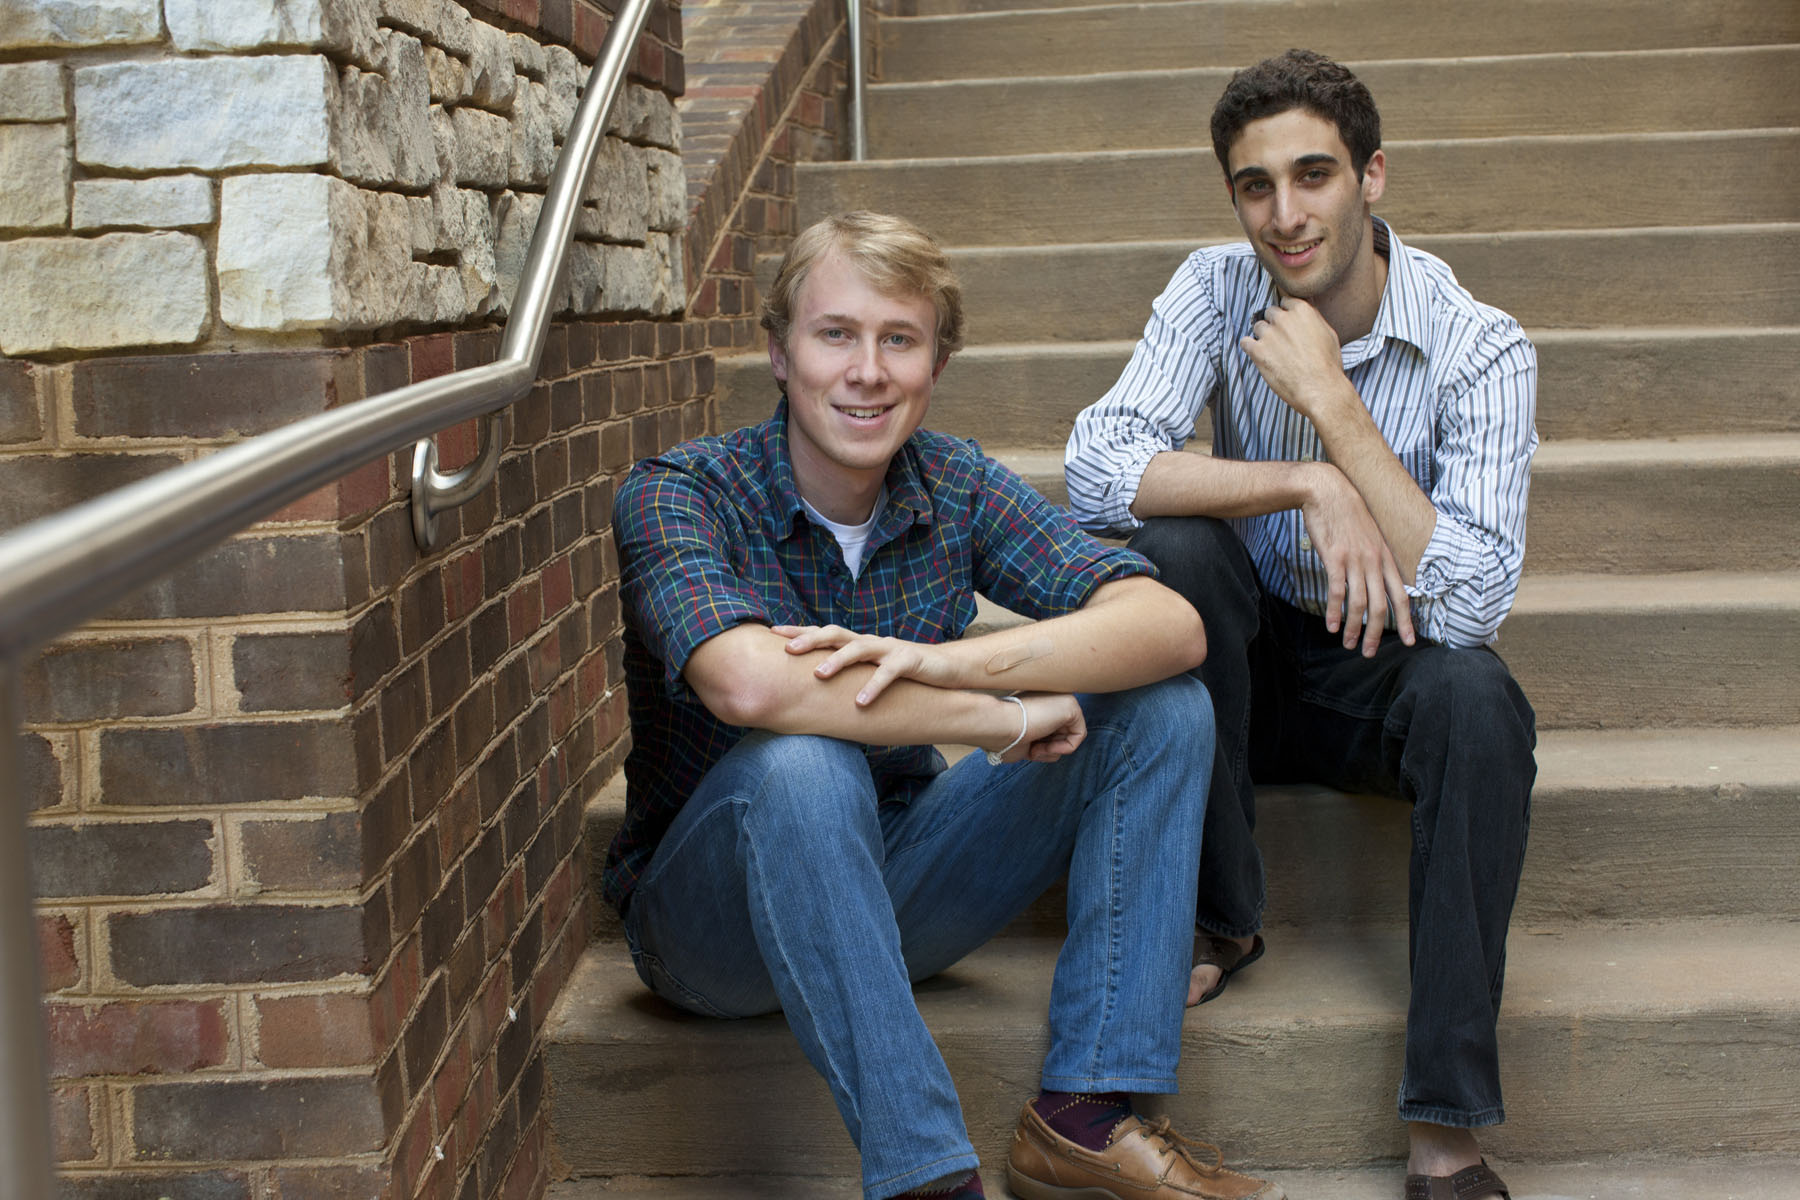 Matt Savarese and Jeffery Luppino-Esposito sitting on steps smiling at the camera